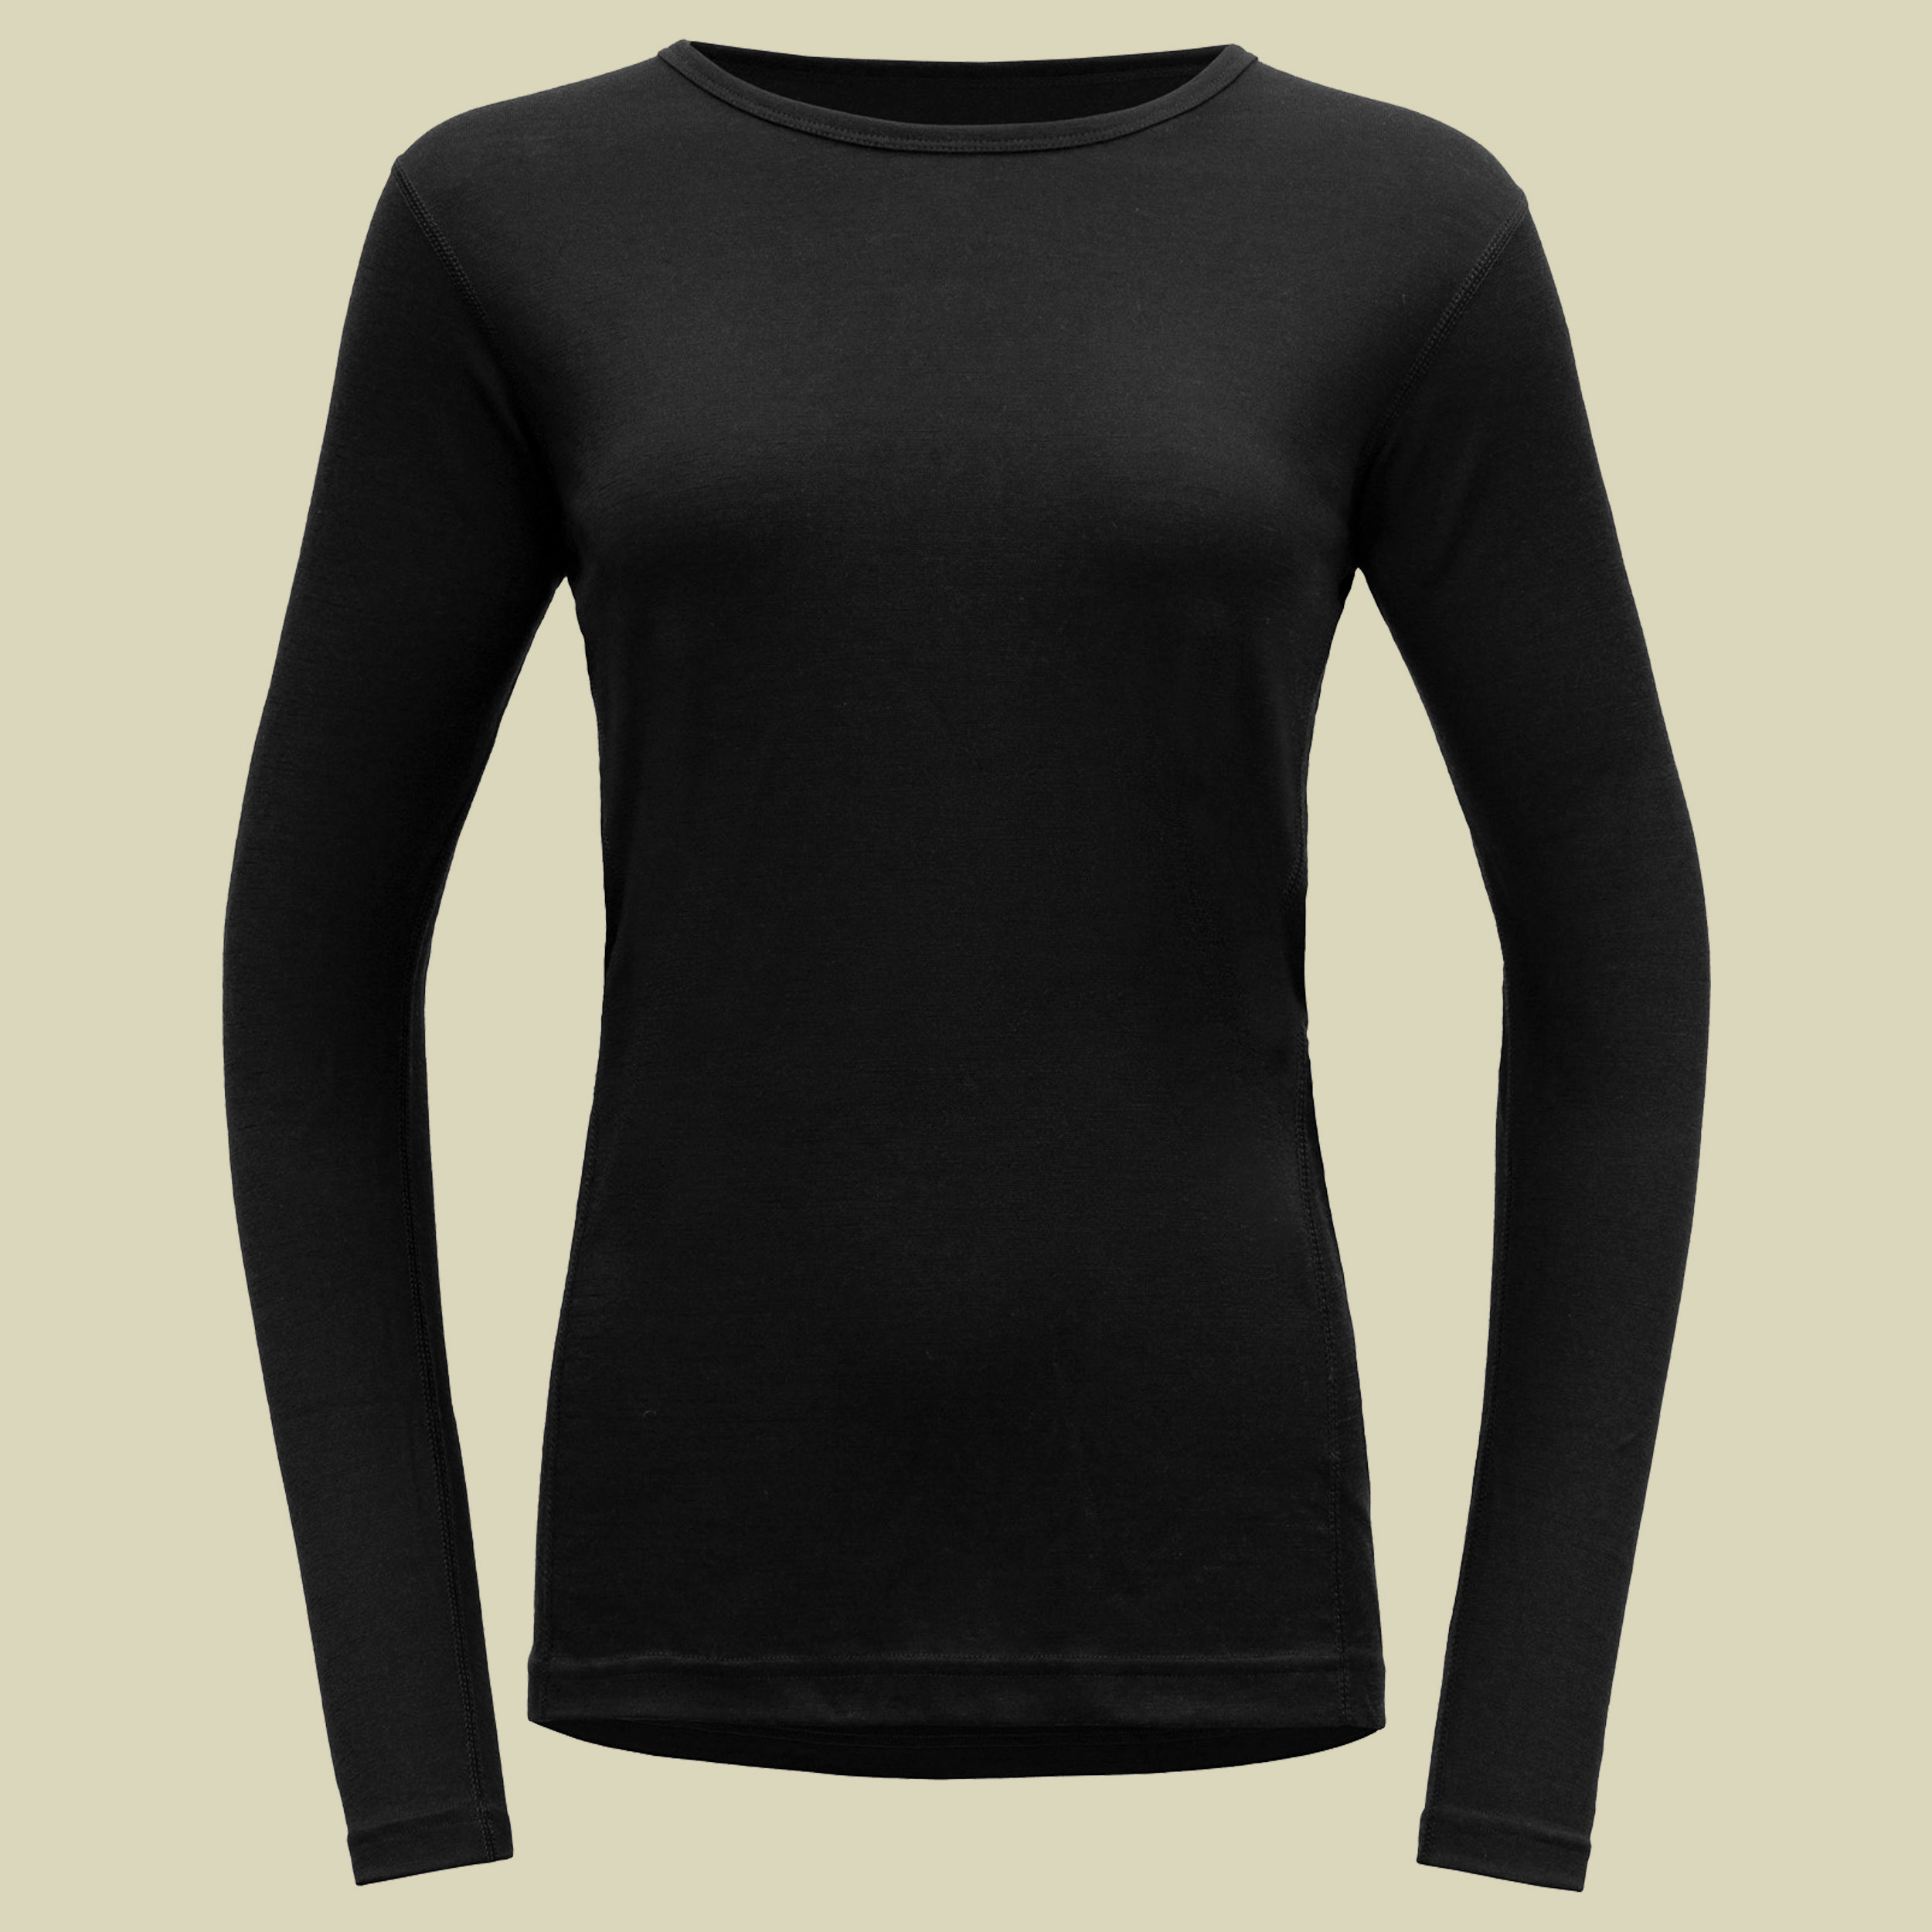 Jakta Merino 200 Shirt Woman Größe M  Farbe black